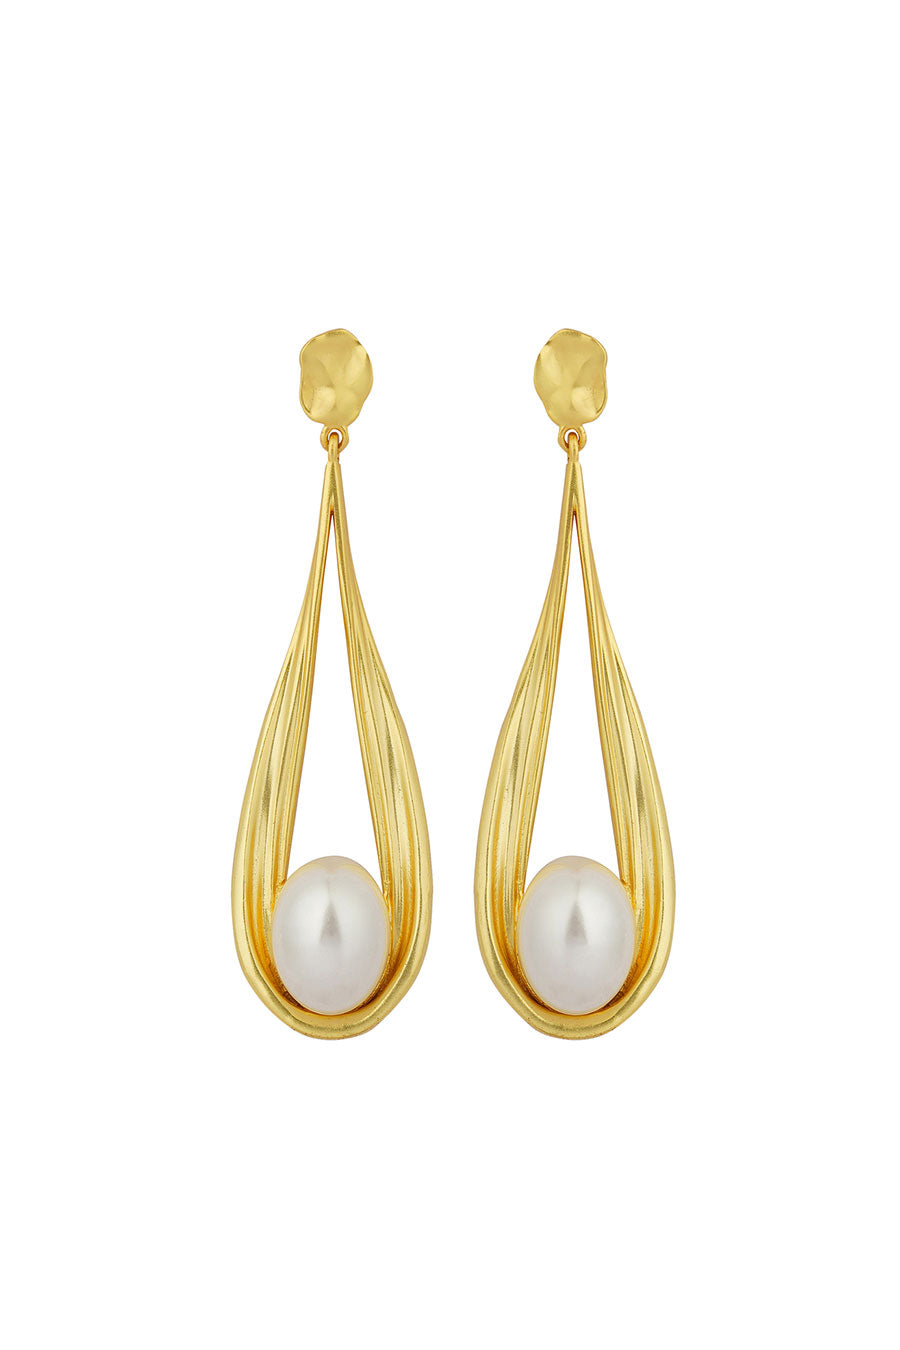 Make Dreams Work - Gold Plated Pearl Earrings